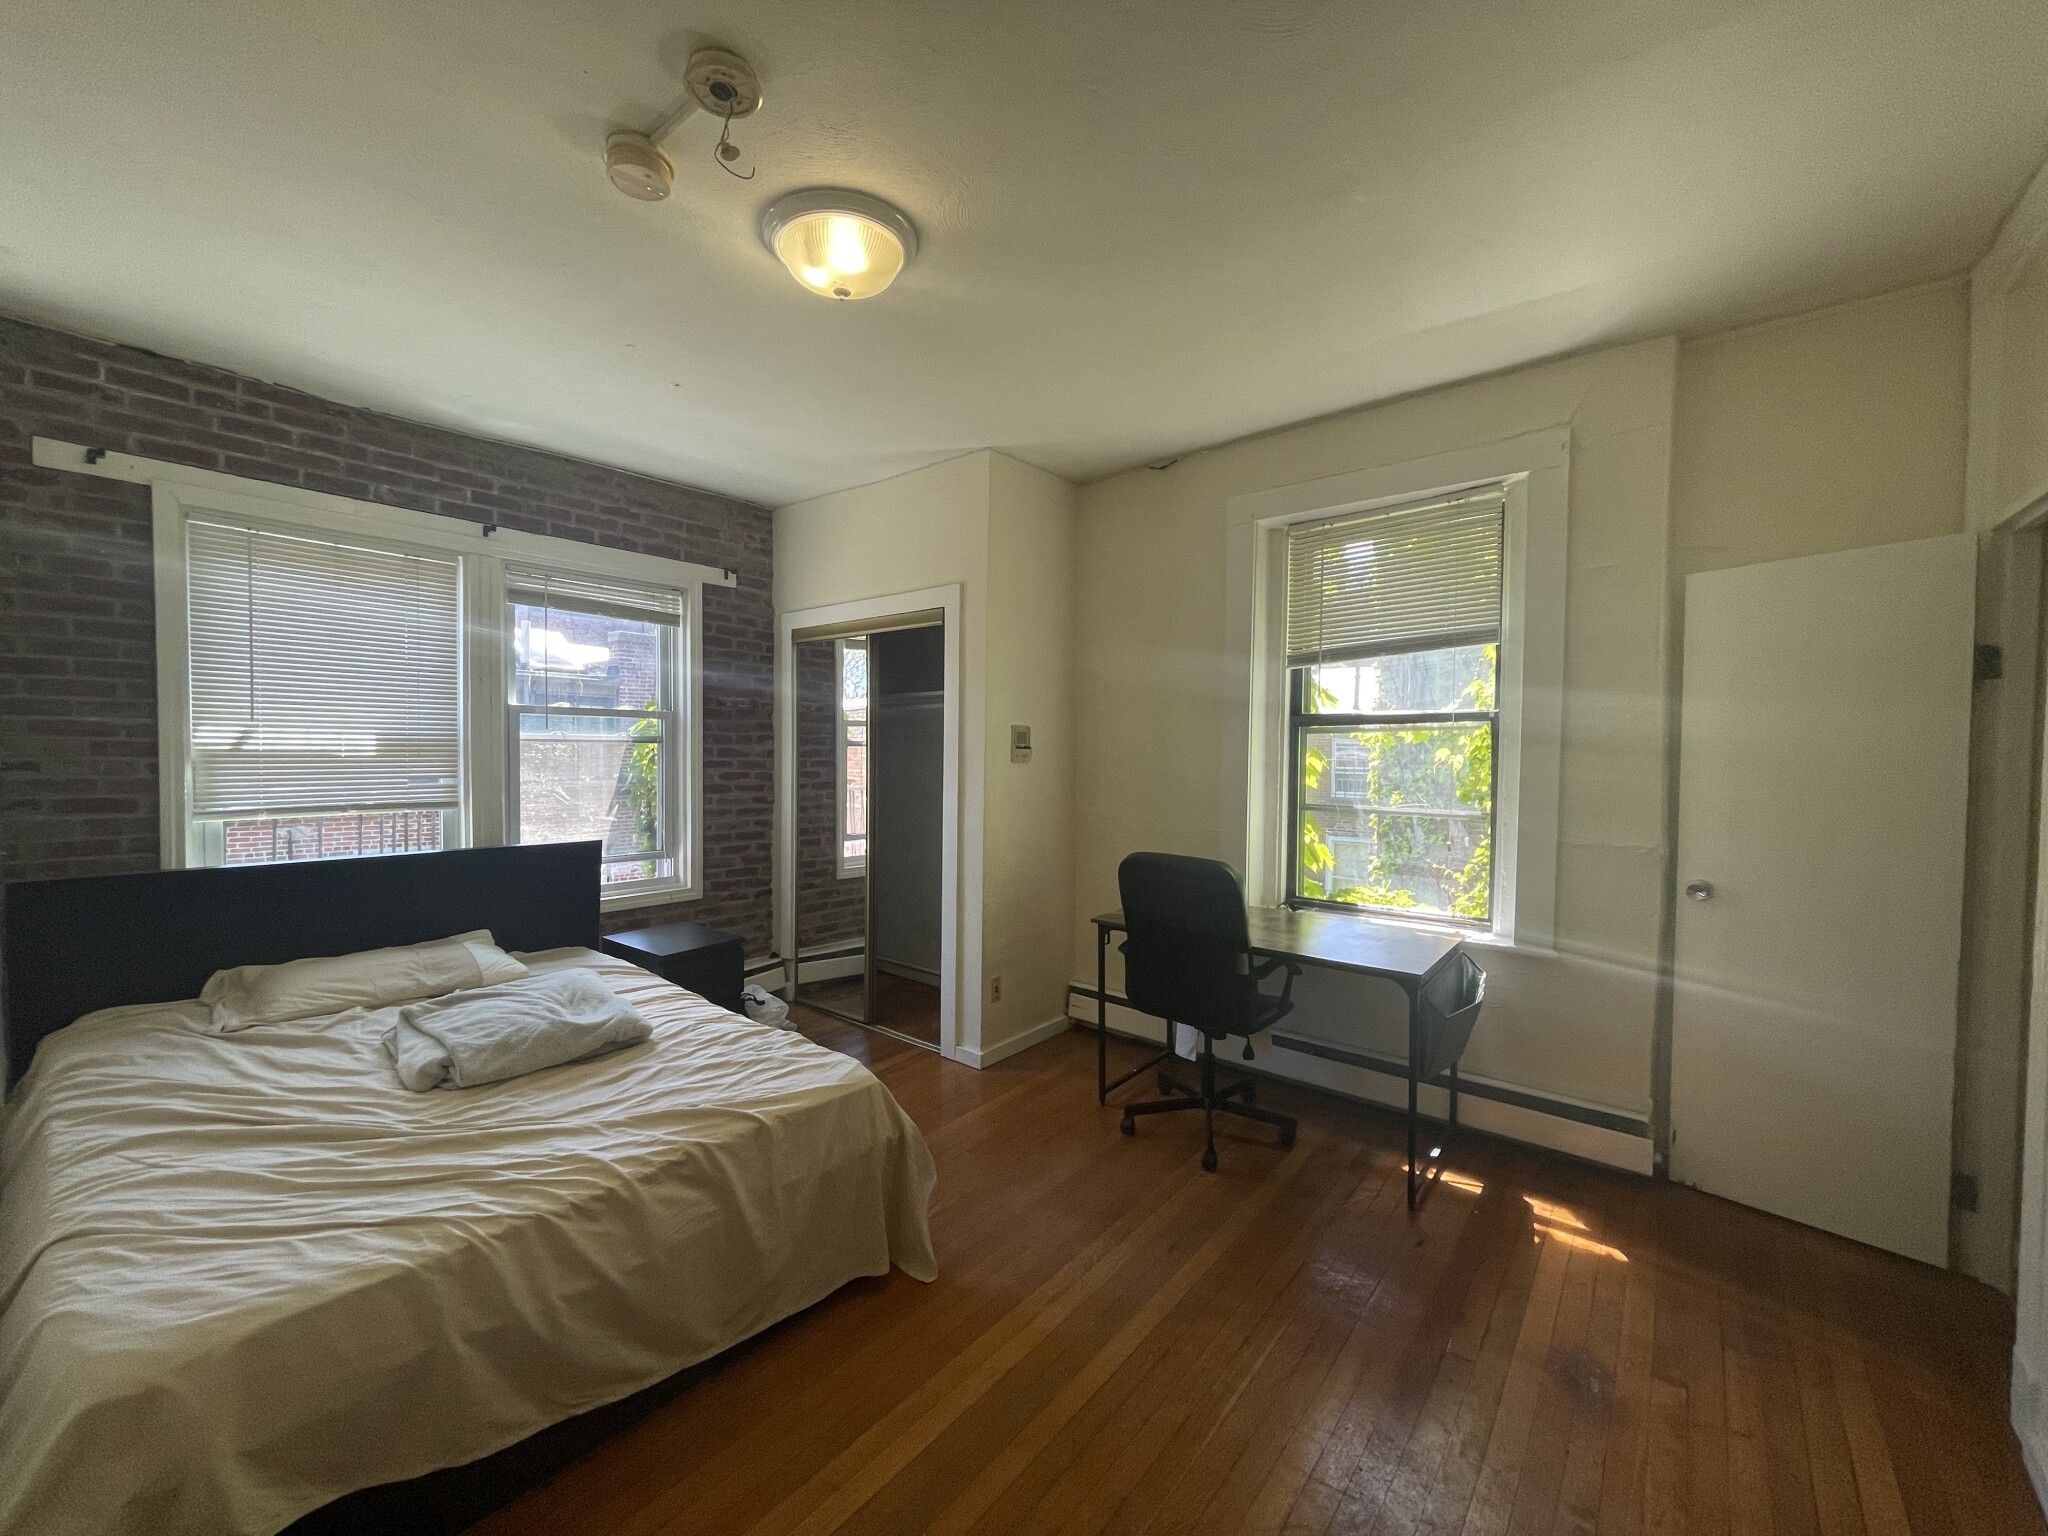 Photos of apartment on Charles,Boston MA 02114